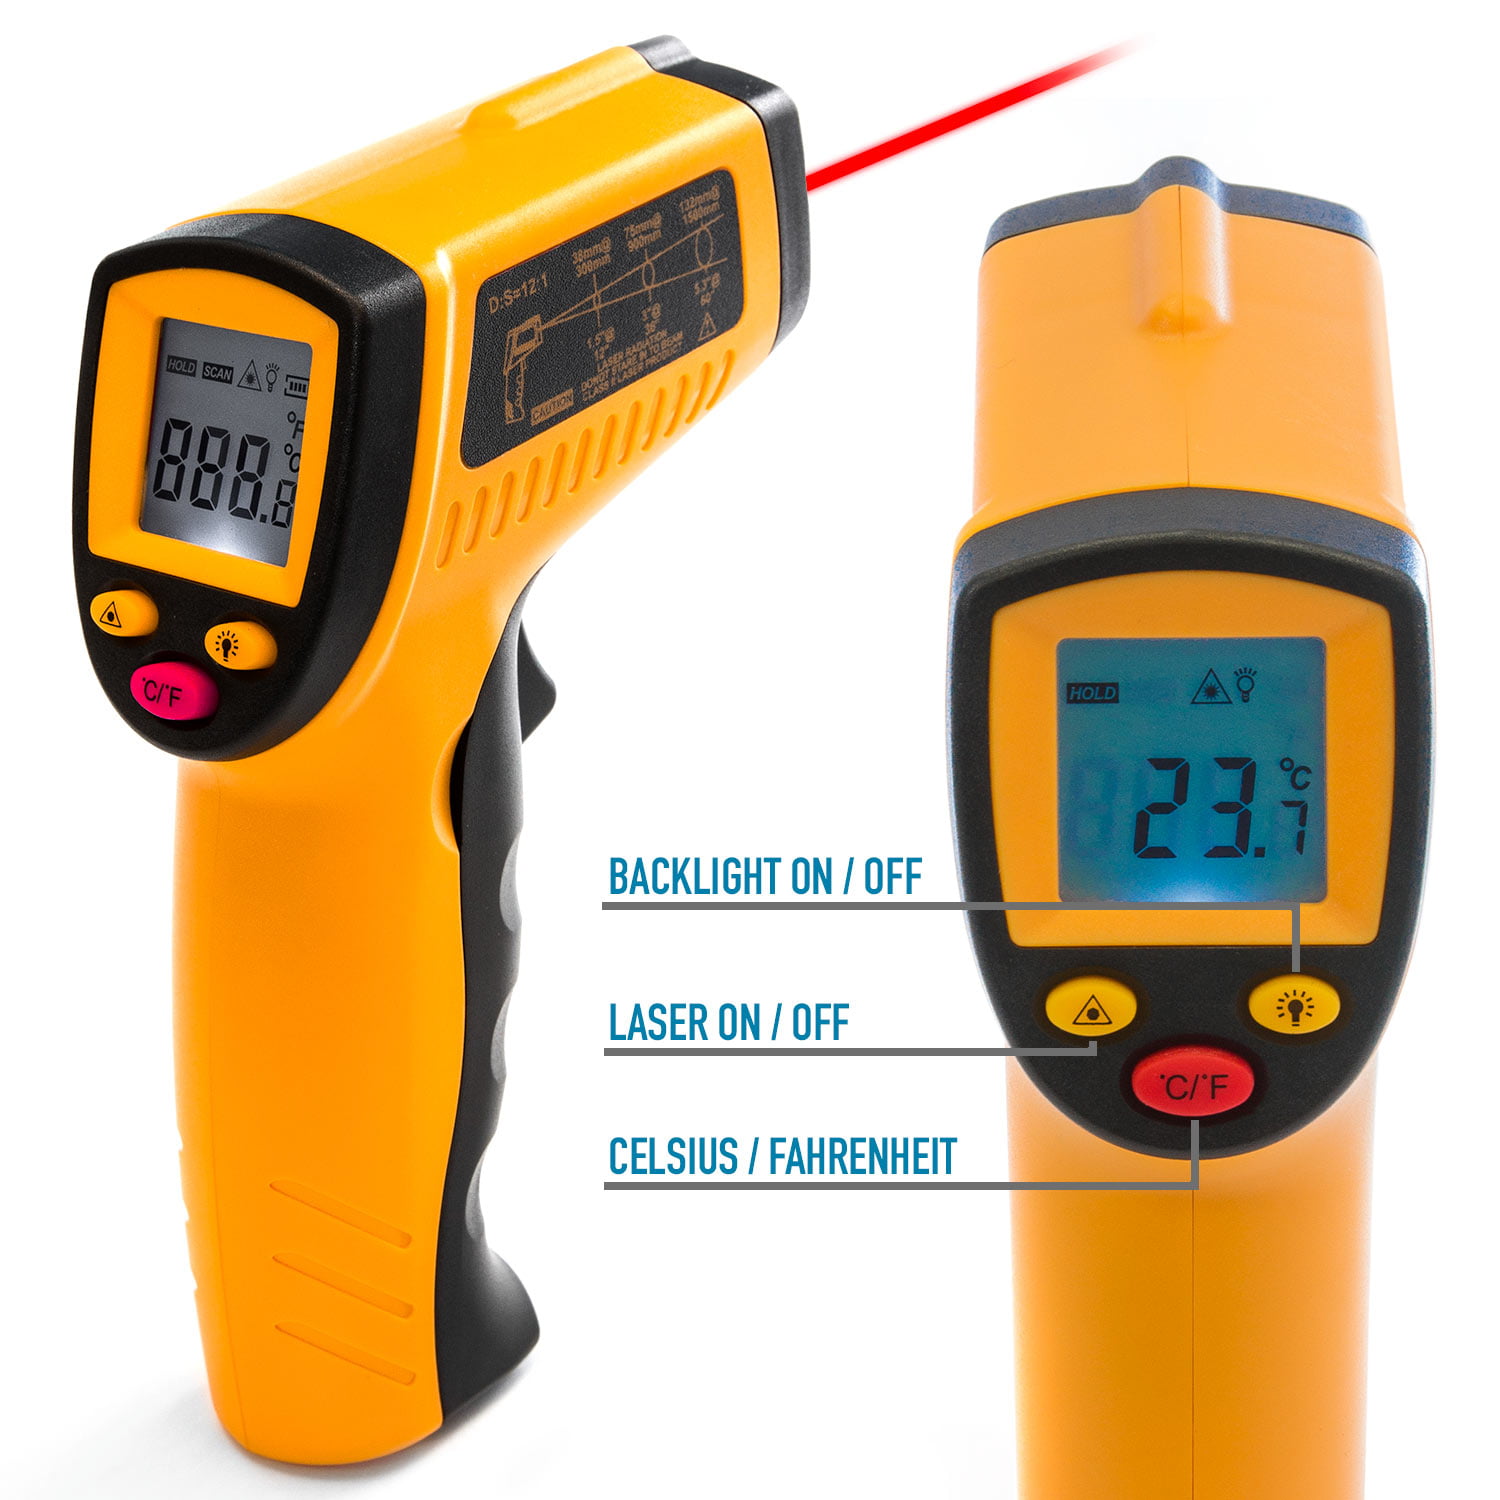 Customized In Stock Human Body Digital thermometer Gun Laser GM3655  Suppliers - Low Price - Free Sample - Lancol